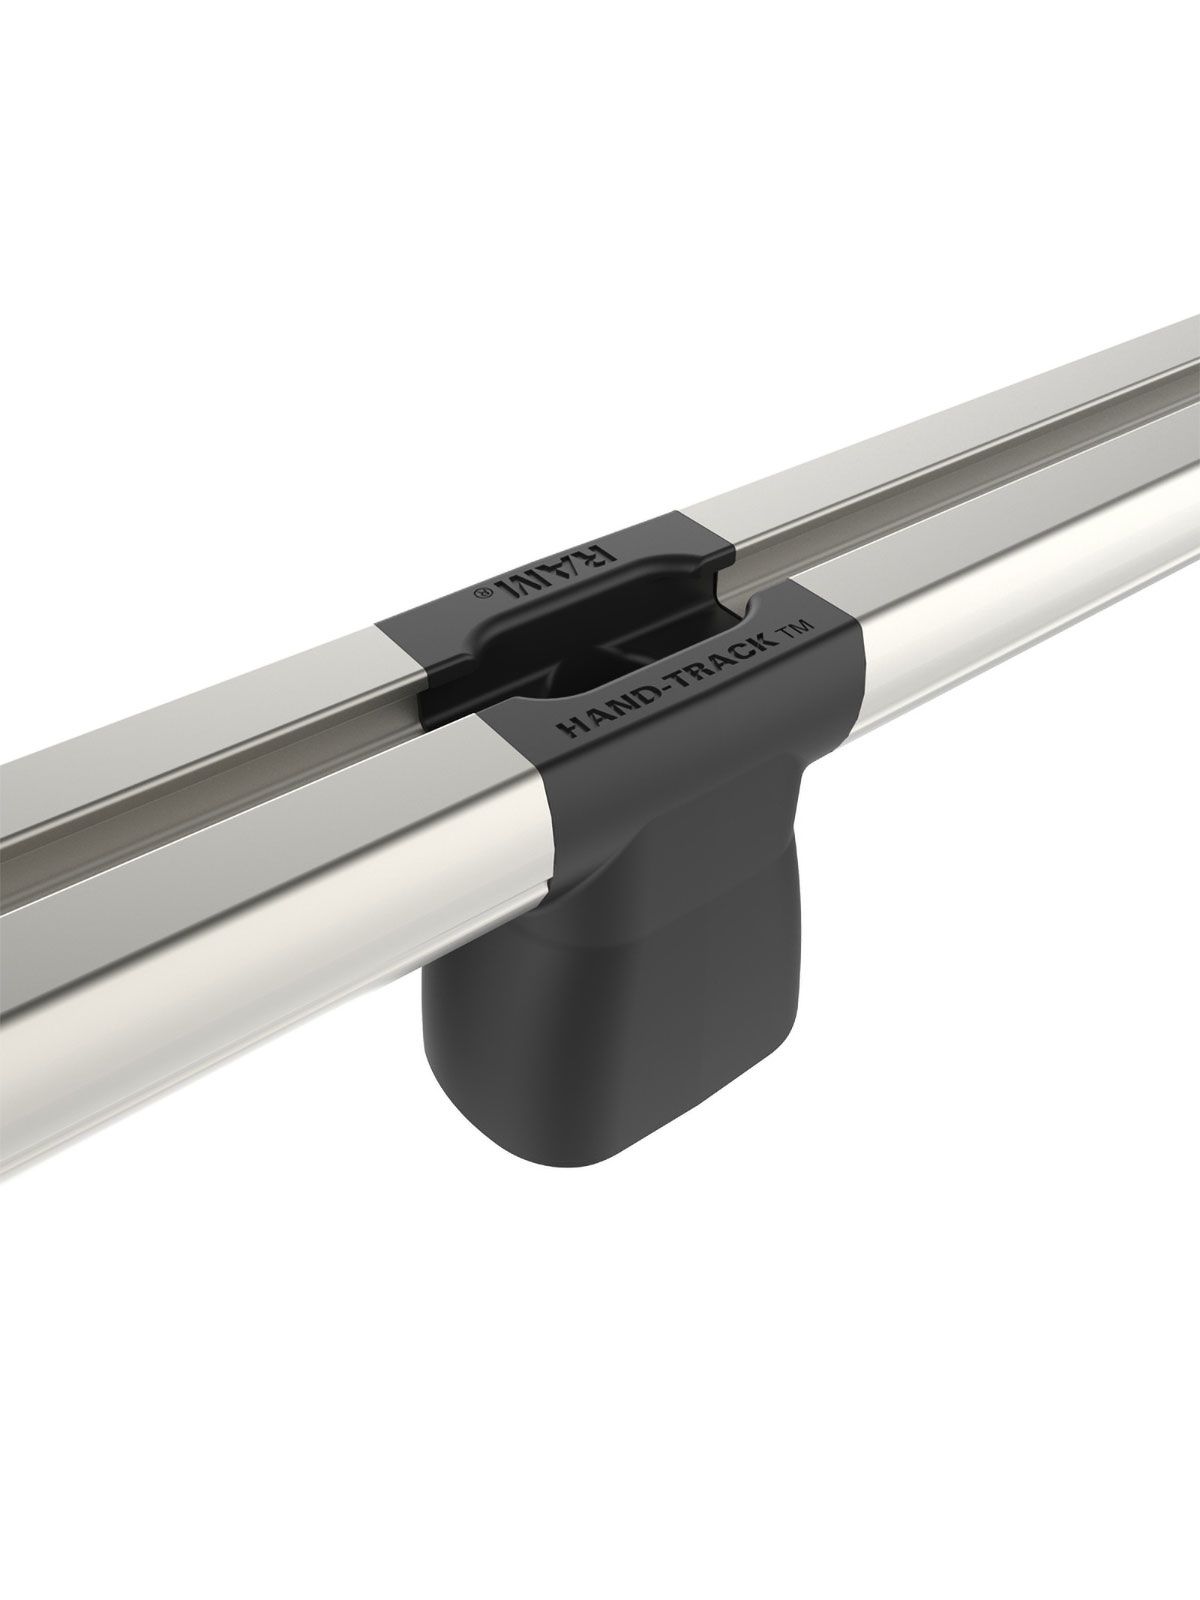 RAM Mounts Hand-Track Erweiterung - Aluminium-Schiene inkl. Steckverbindung, Innenlänge 762 mm (30 Zoll), eloxiert